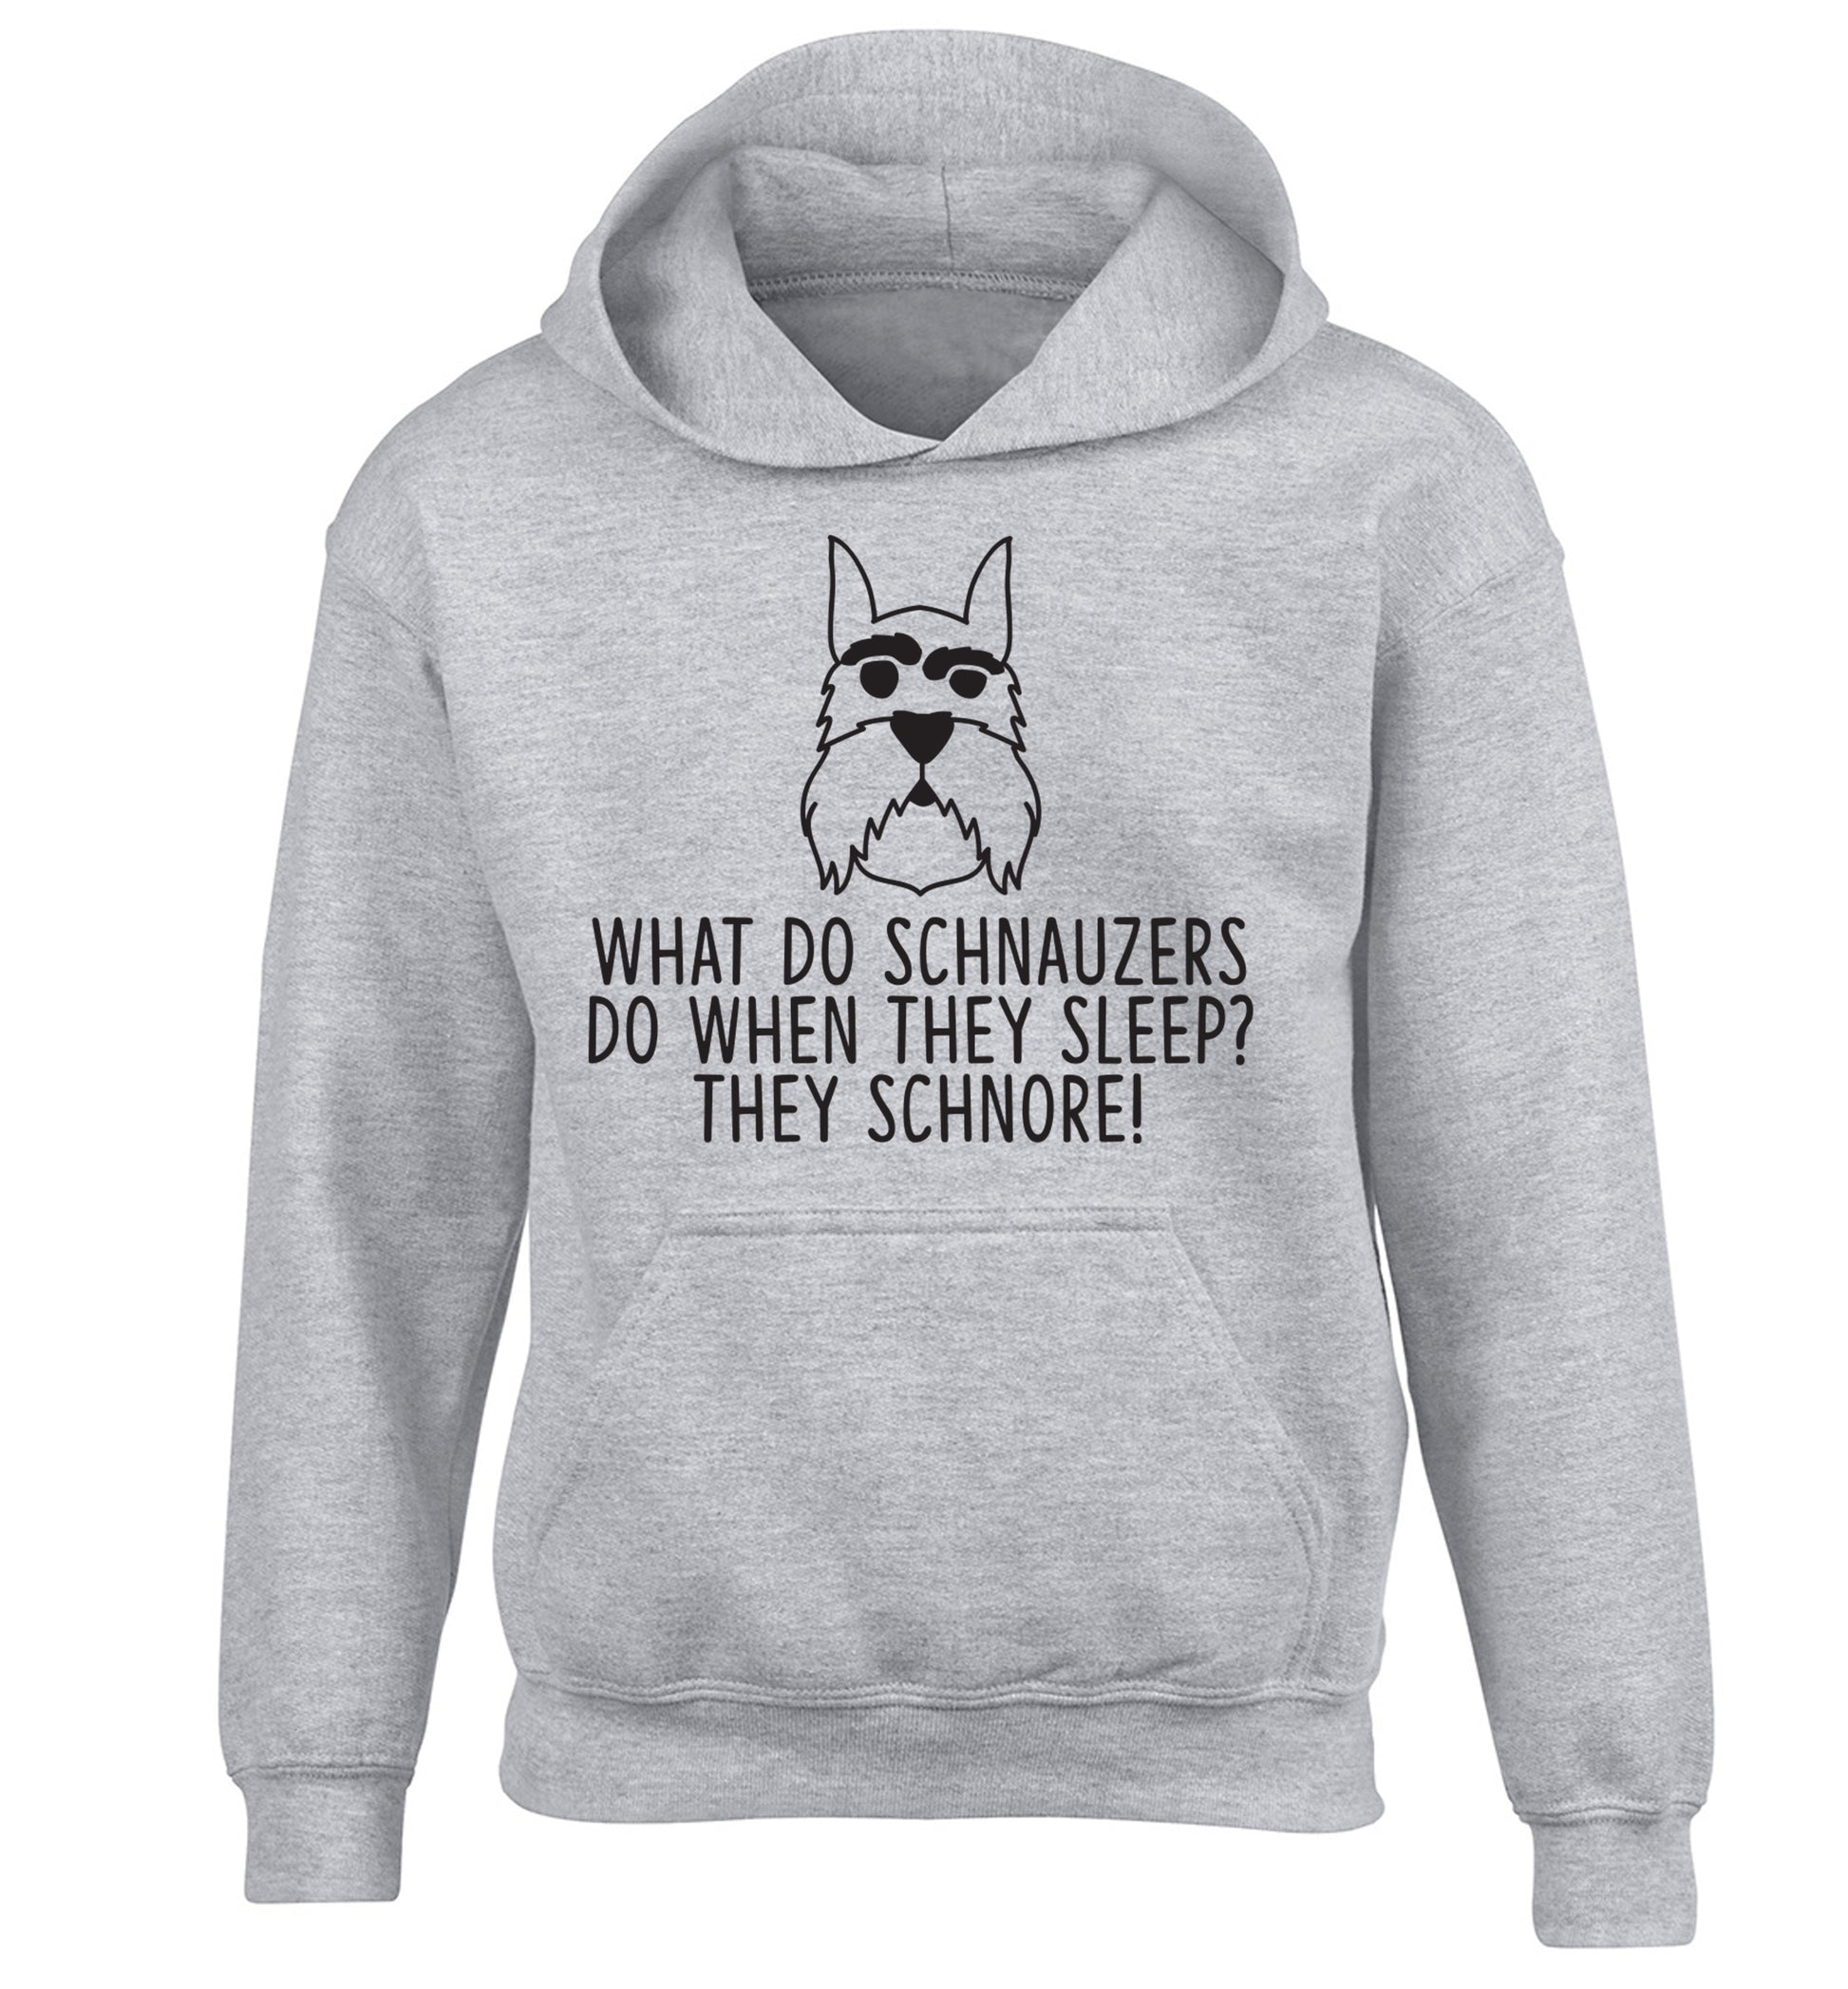 What do schnauzers do when they sleep? Schnore! children's grey hoodie 12-13 Years